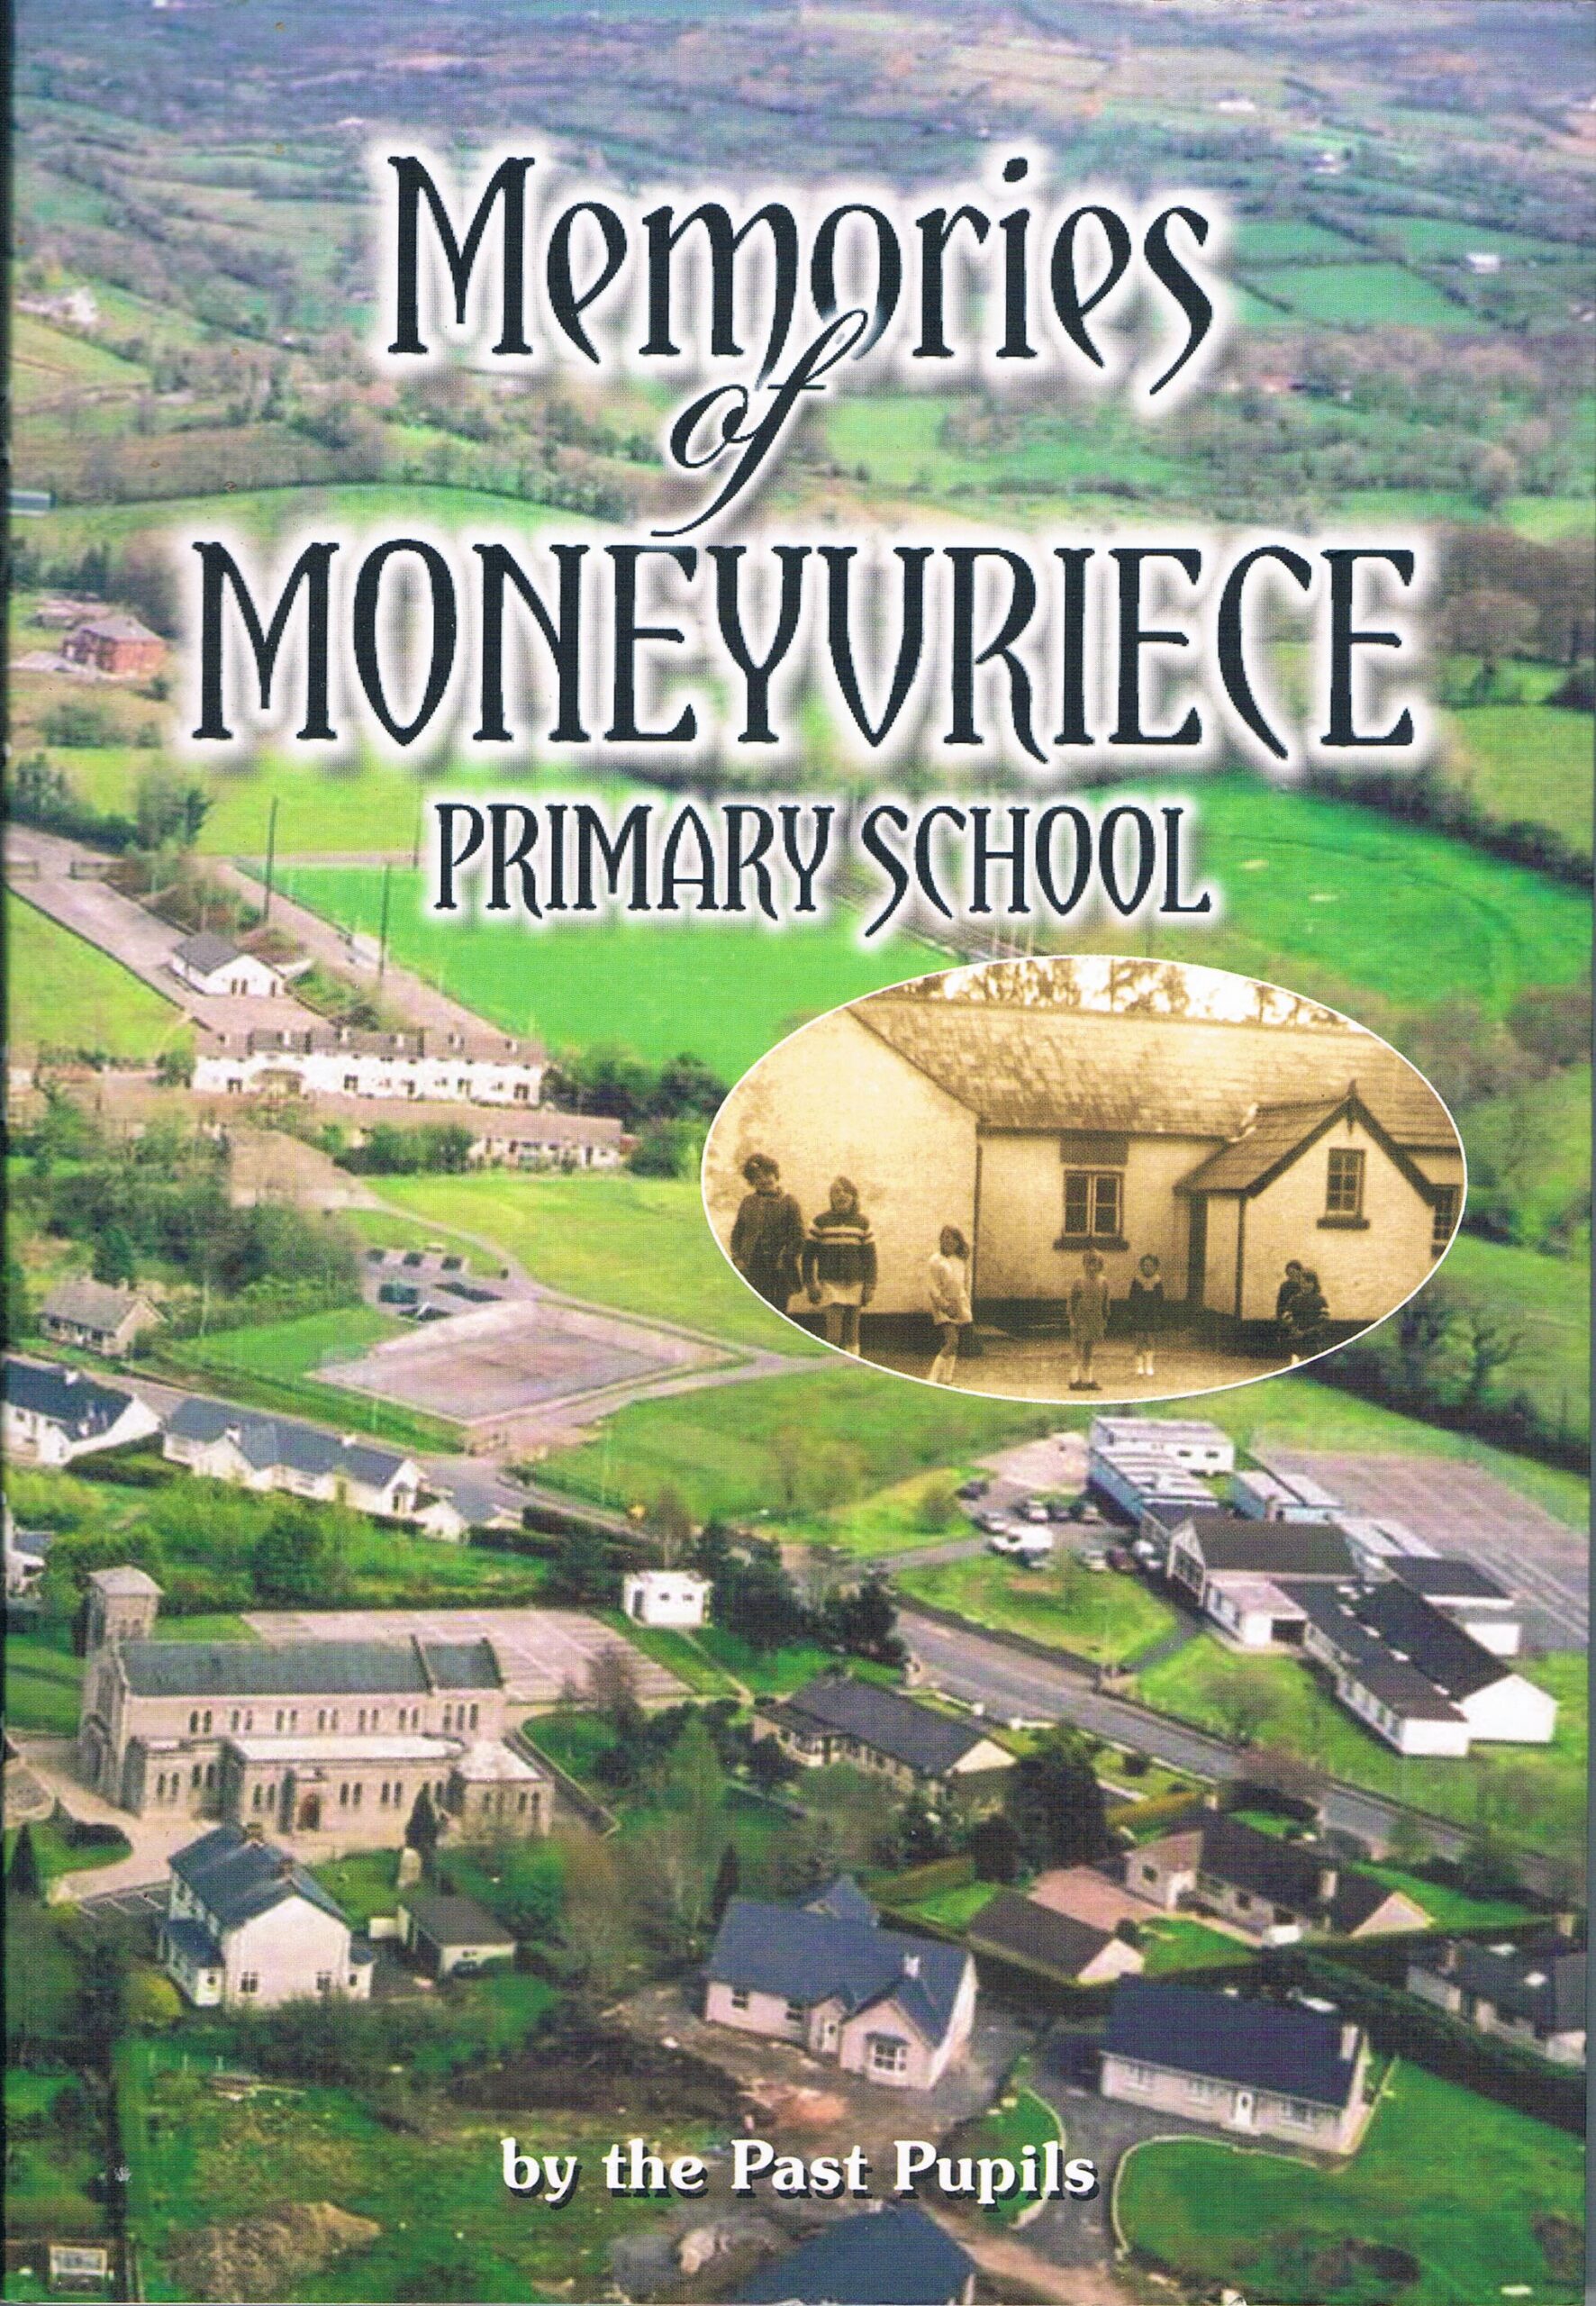 Memories of Moneyvriece Primary School by Joseph McVeigh